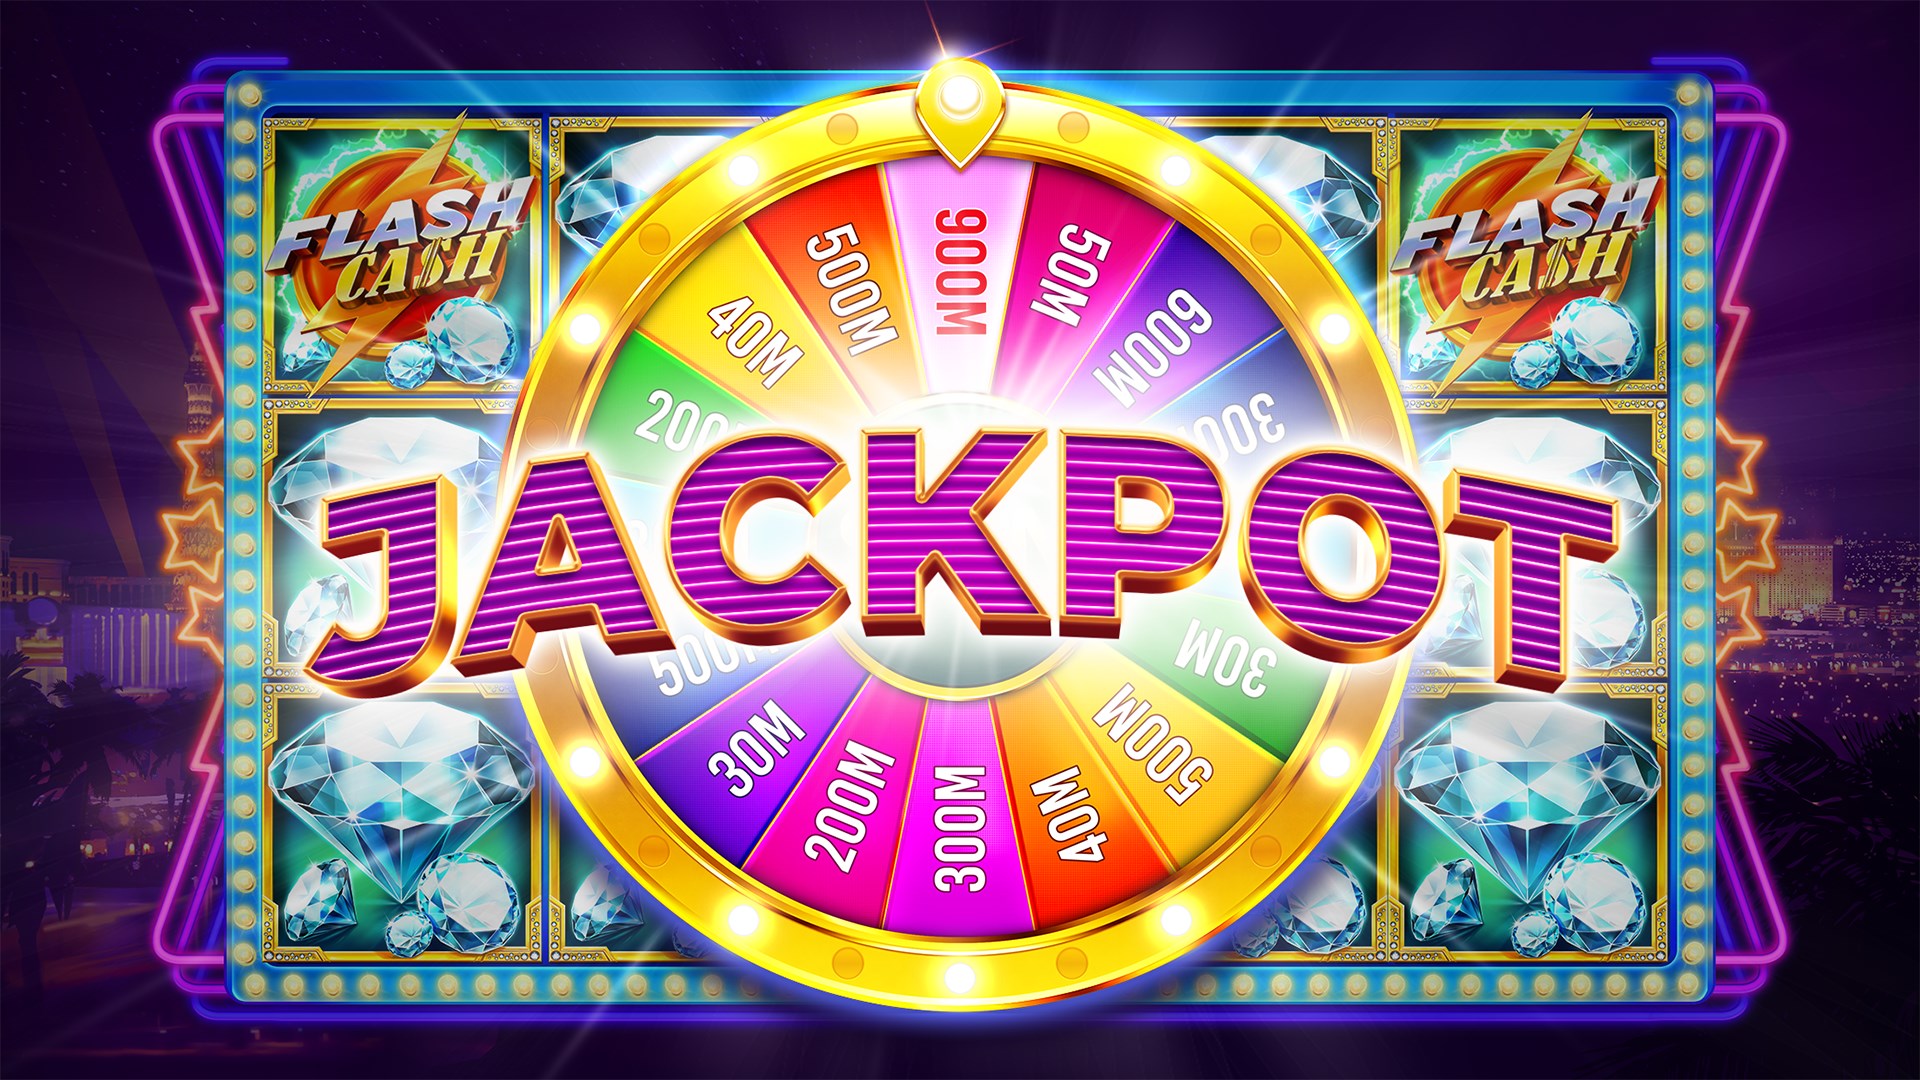 Eksplorasi Dunia Slot Jackpot: Bagaimana Cara Kerjanya?. Halo, apa kabar teman-teman? Selamat datang di eksplorasi dunia slot jackpot